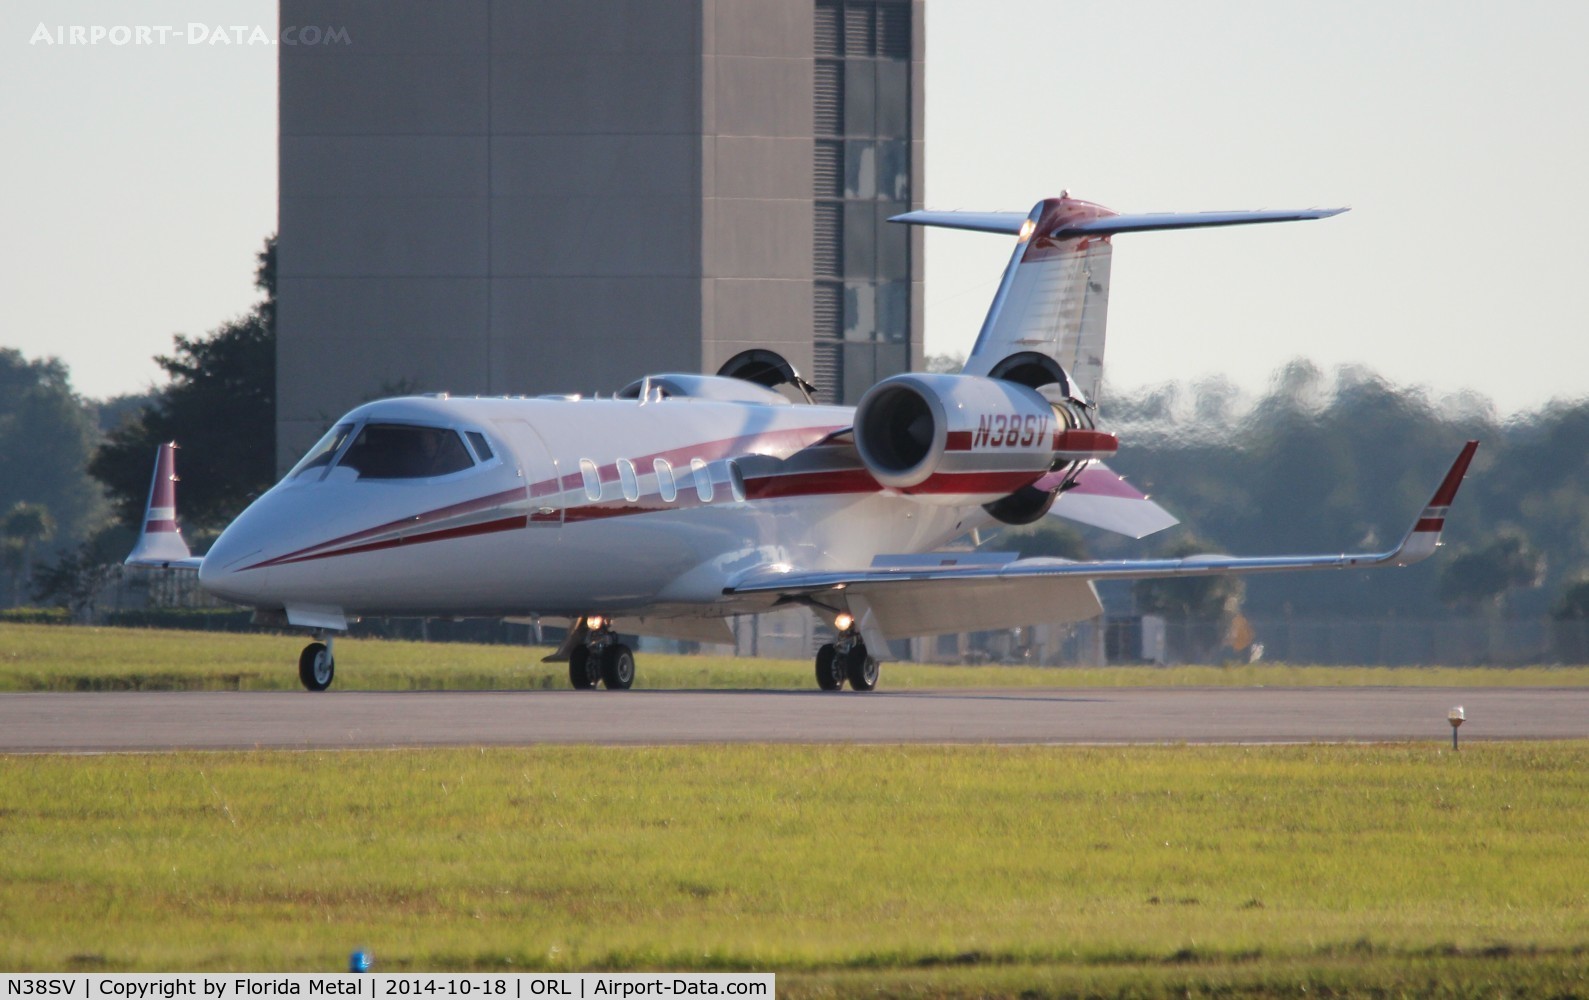 N38SV, 2001 Learjet Inc 60 C/N 229, Lear 60